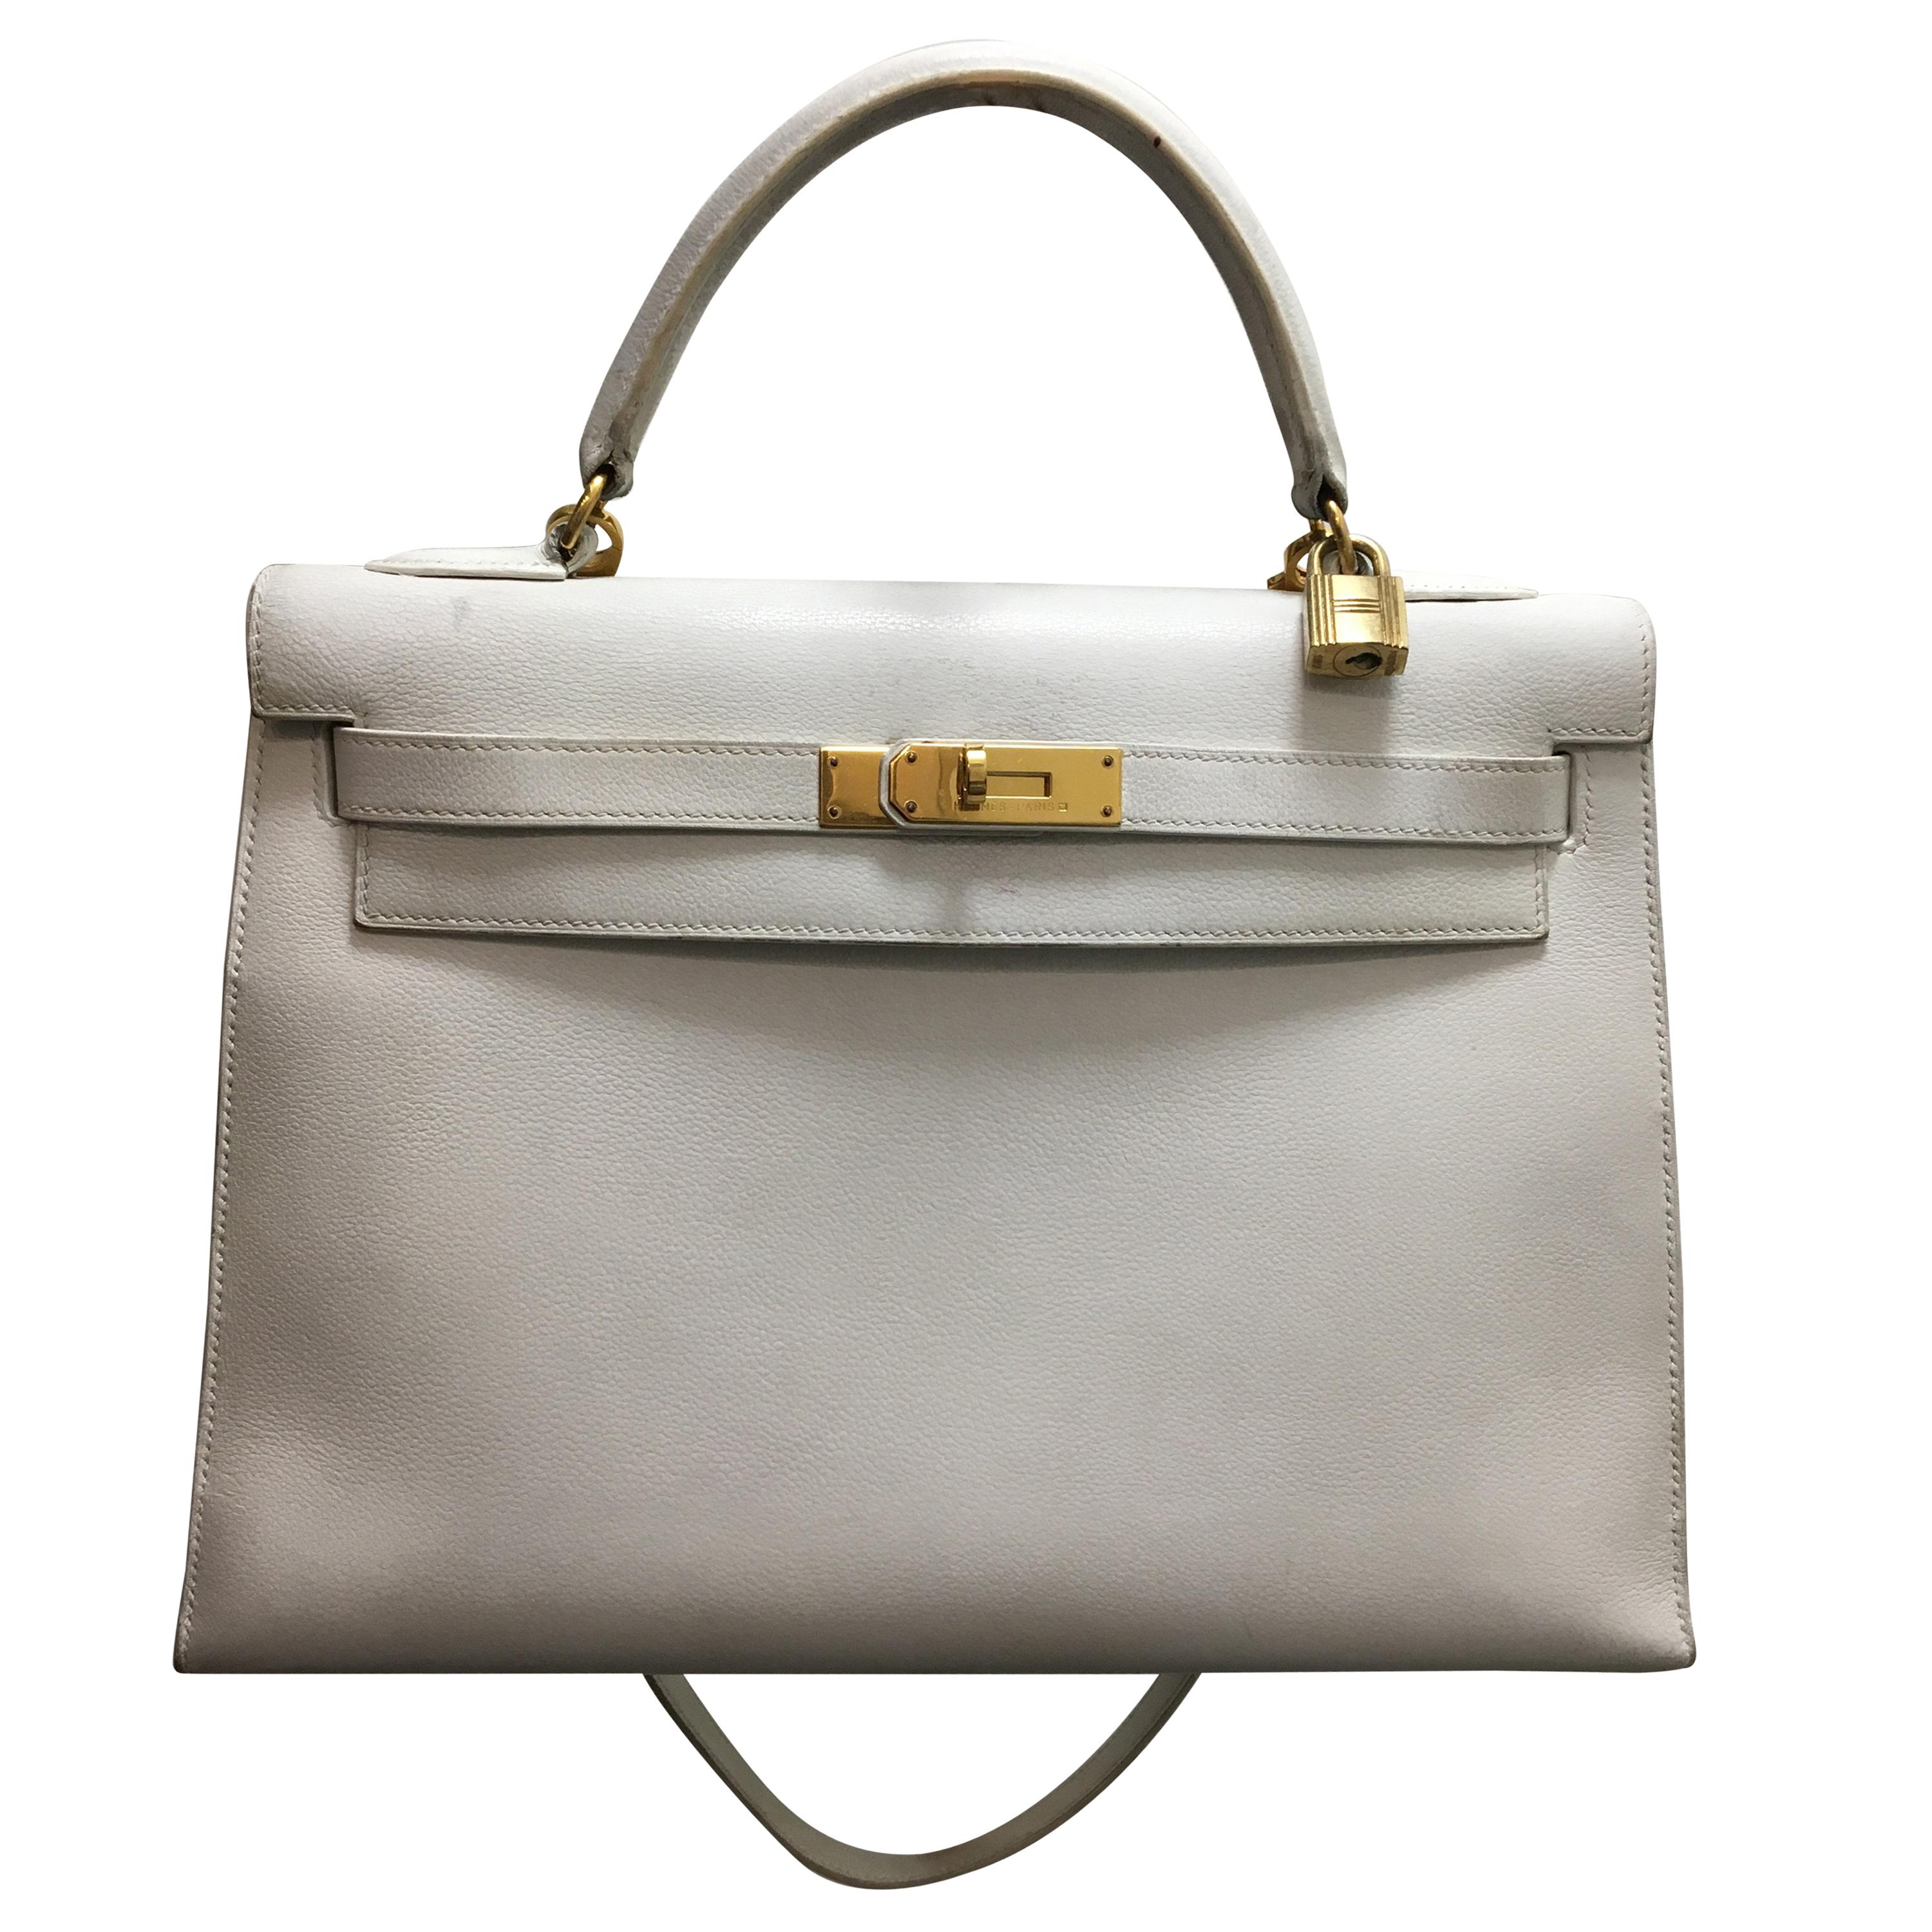  Vintage Hermes Kelly 32 White Leather Bag